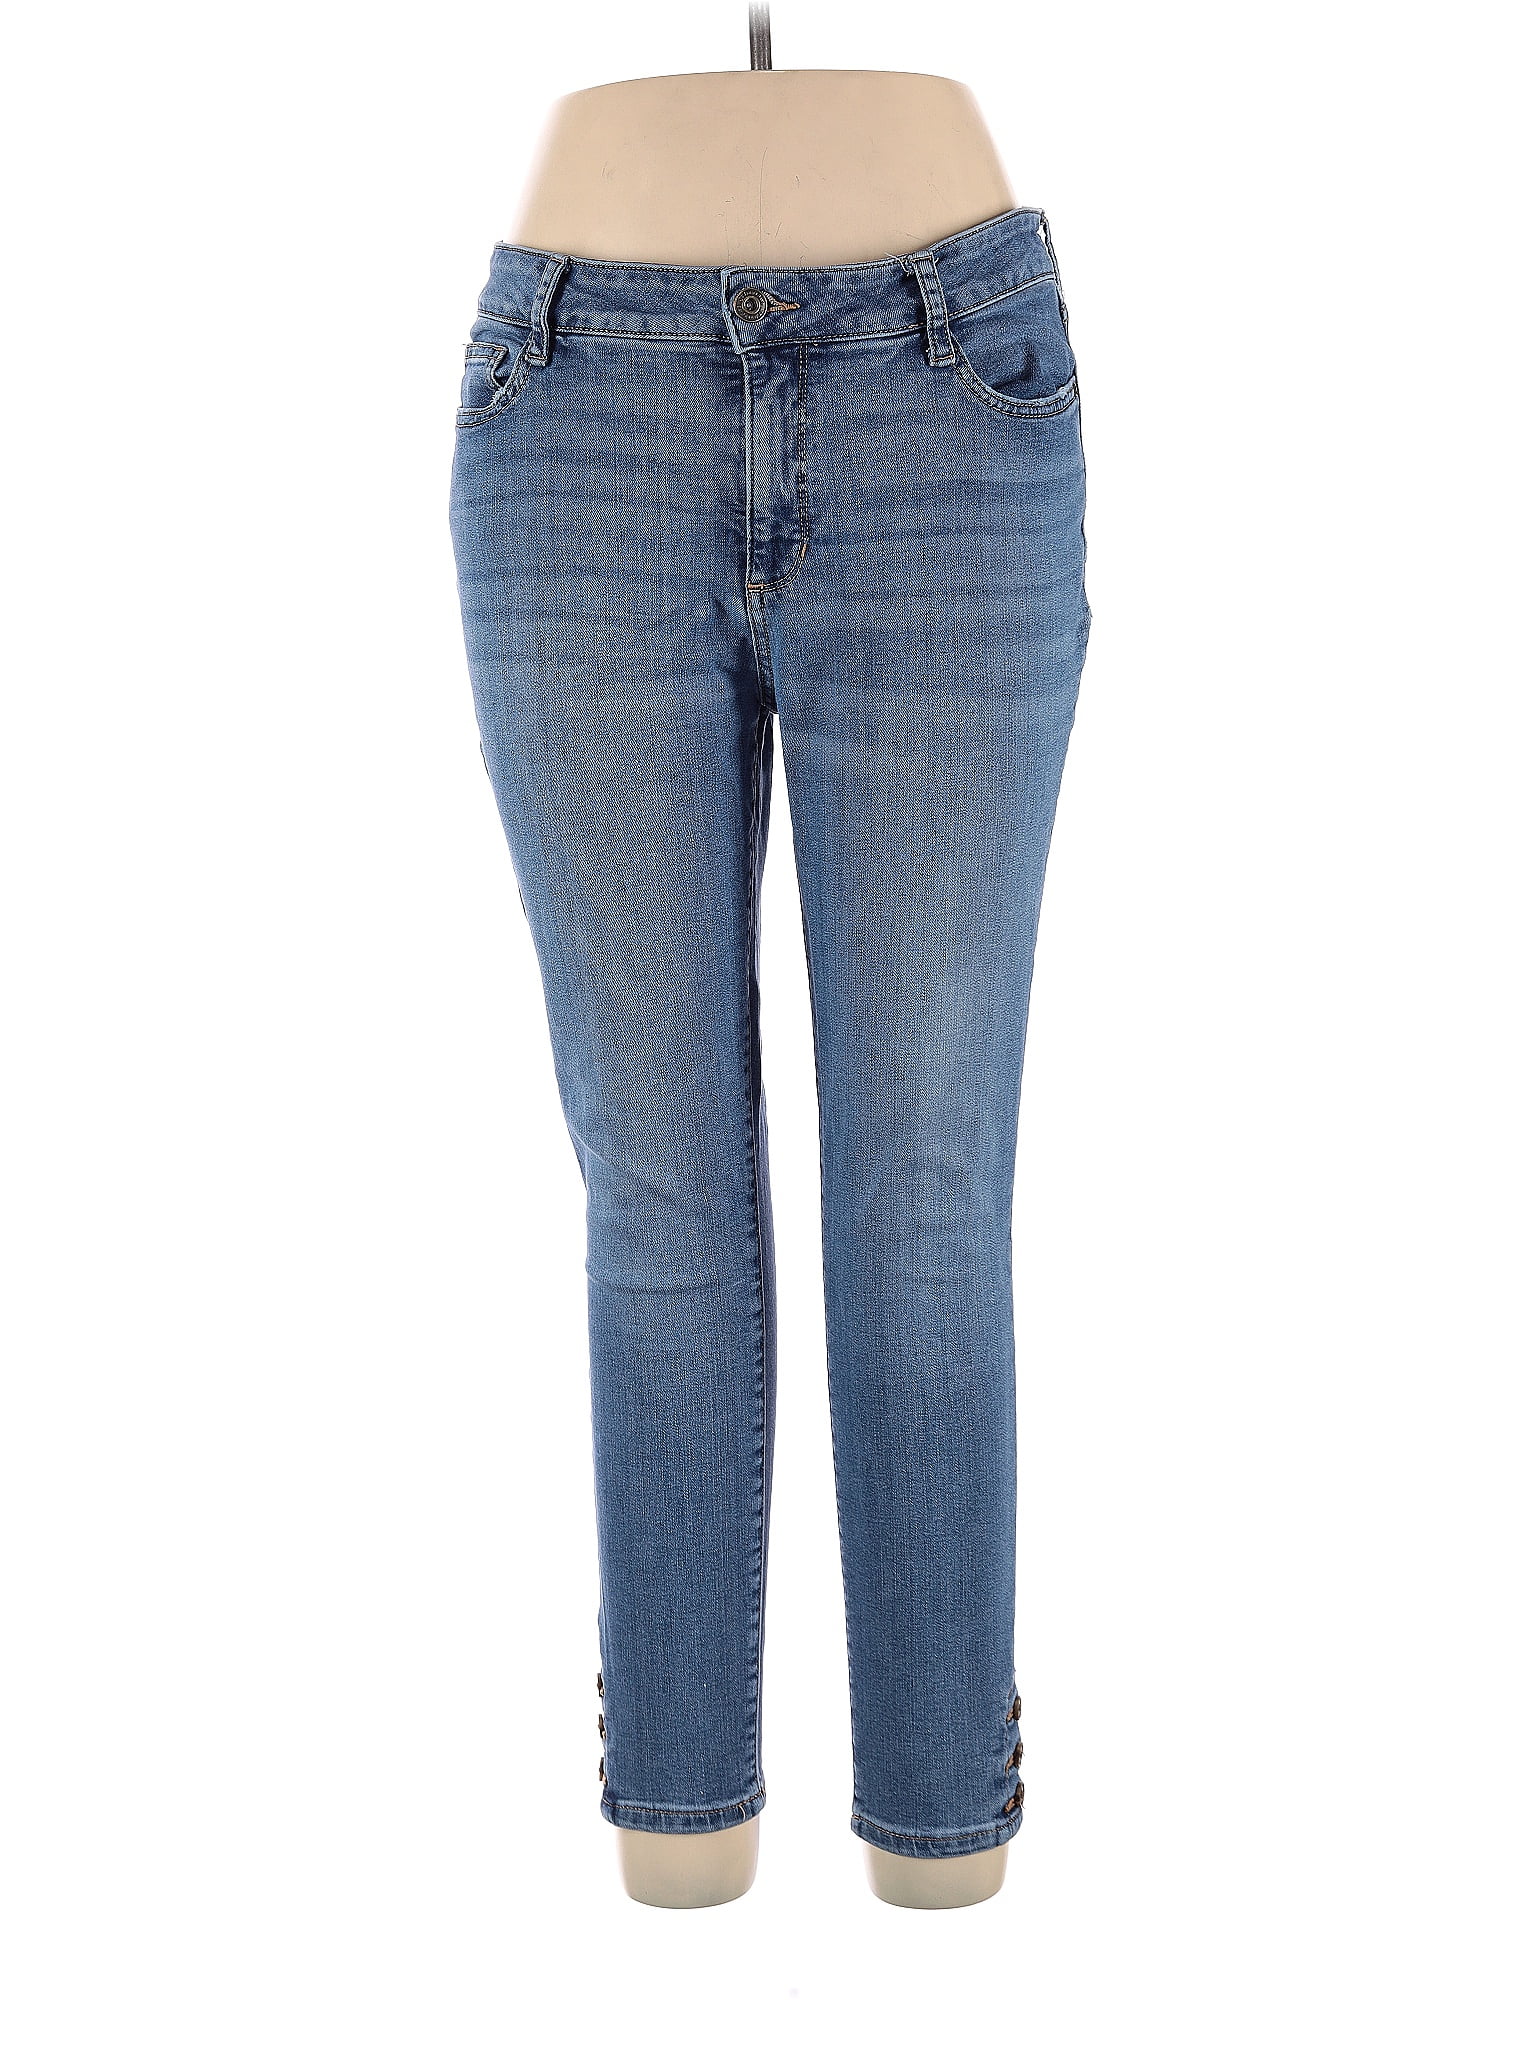 St. John's Bay Blue Jeans Size 14 - 74% off | thredUP